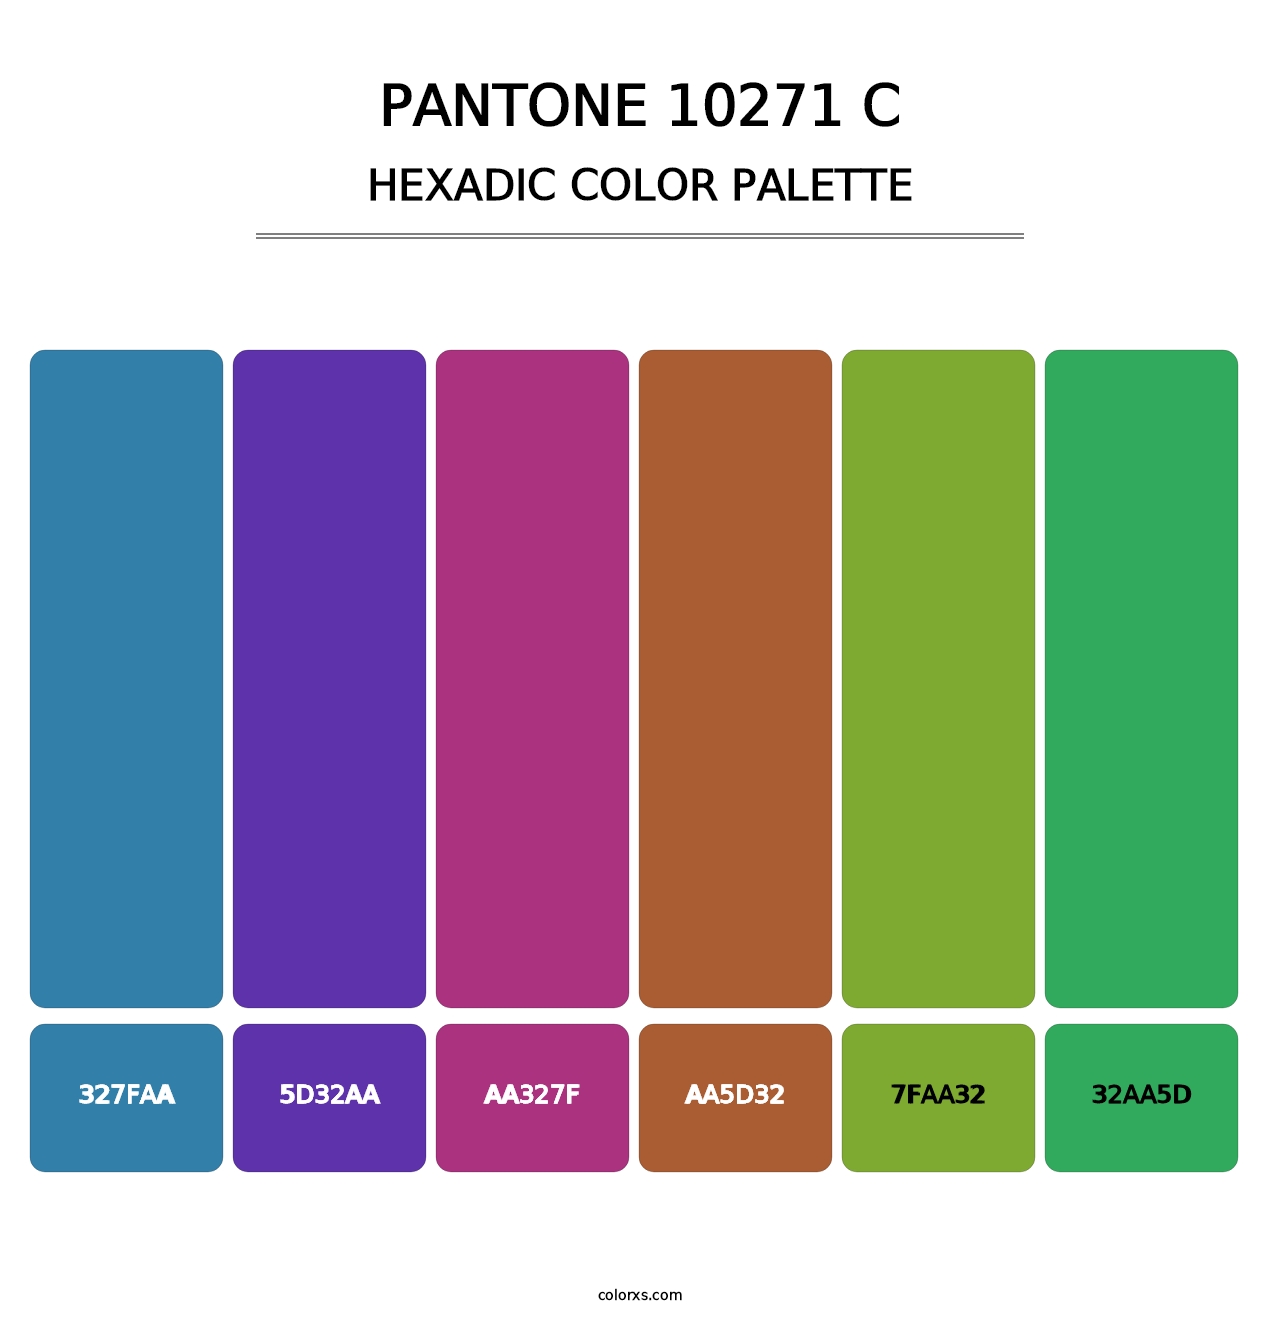 PANTONE 10271 C - Hexadic Color Palette